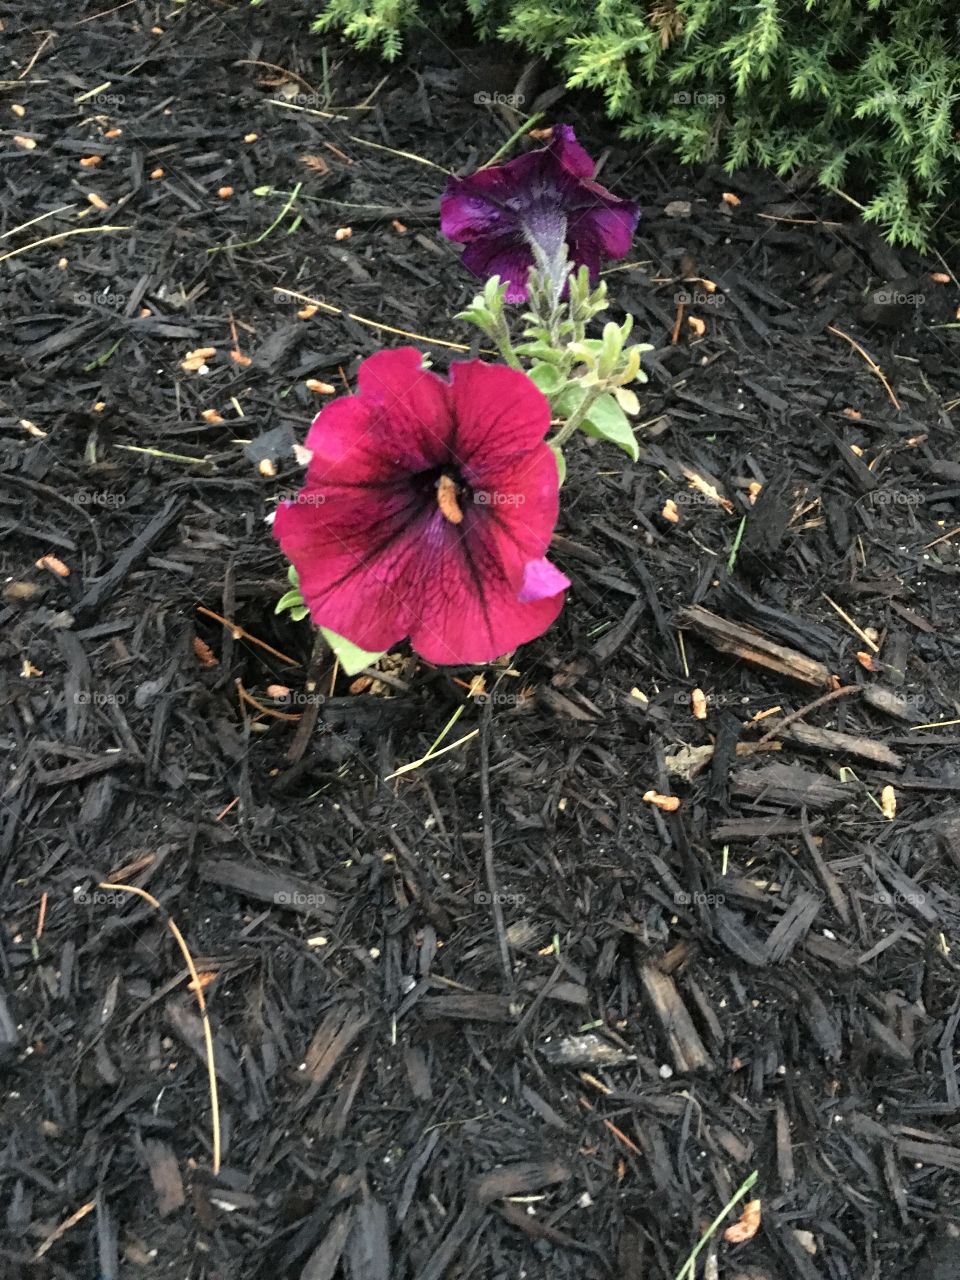 Pretty flower